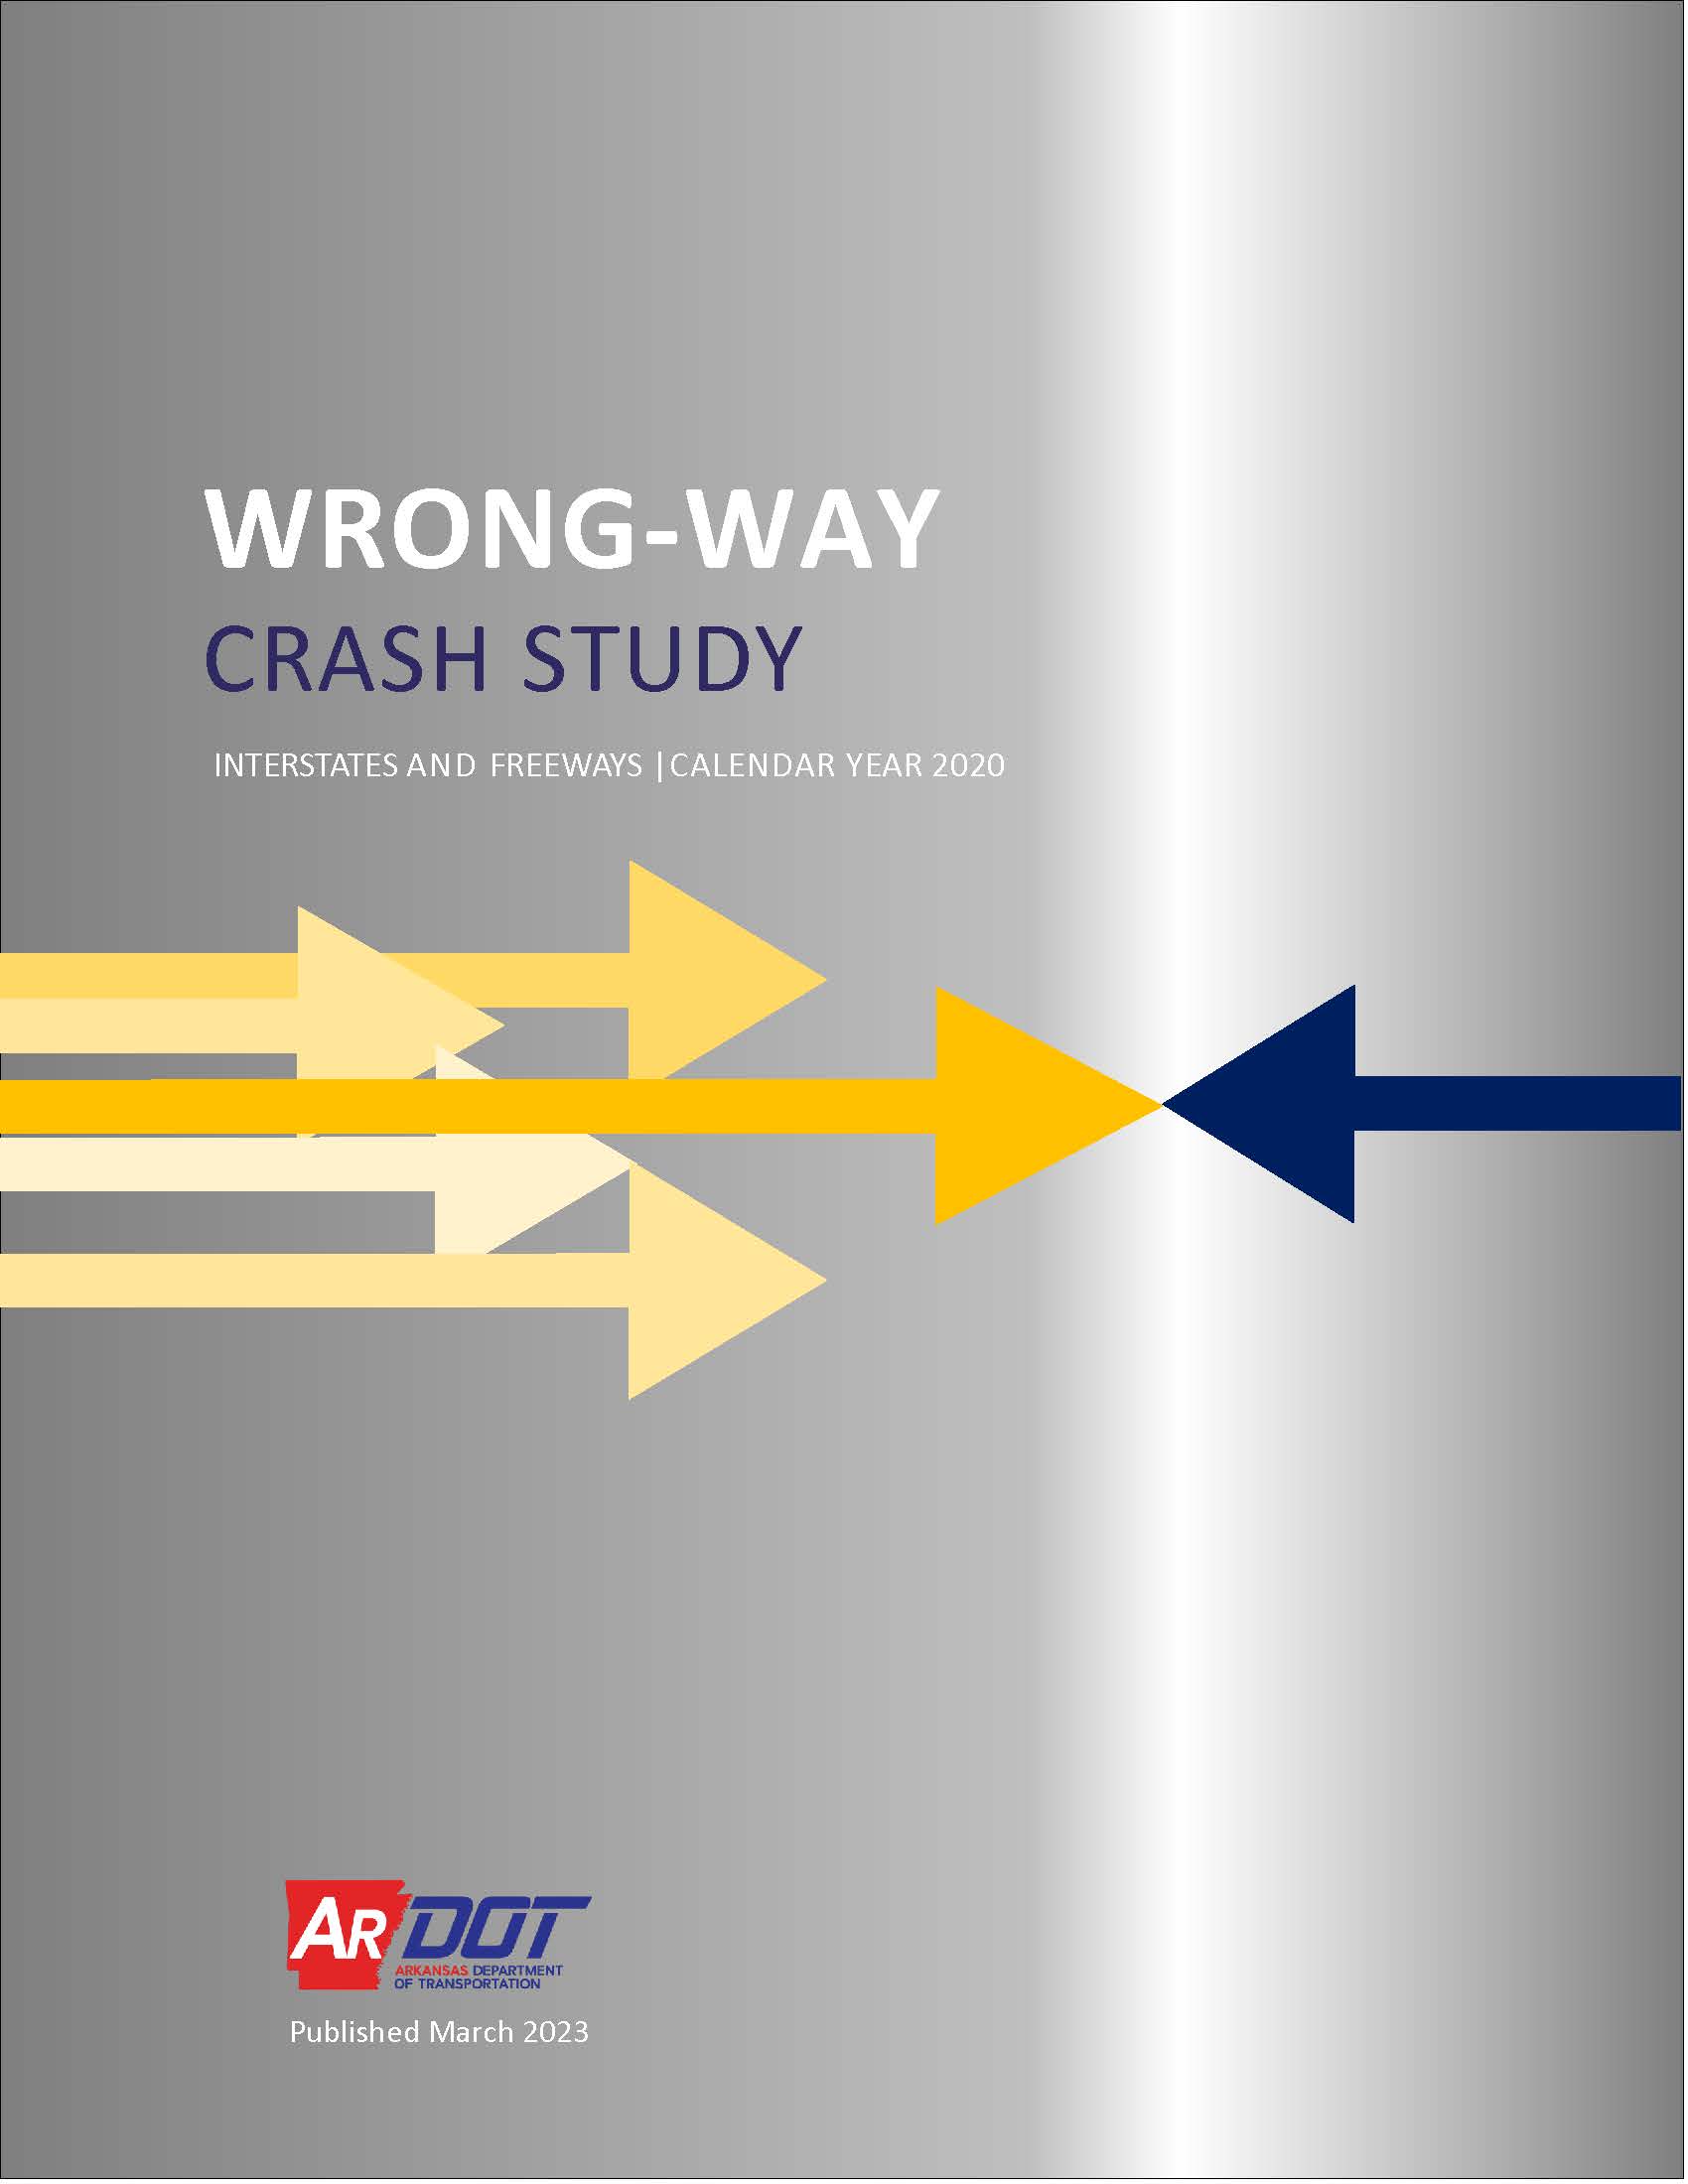 The cover on the CY 2020 Wrong-way crash study.